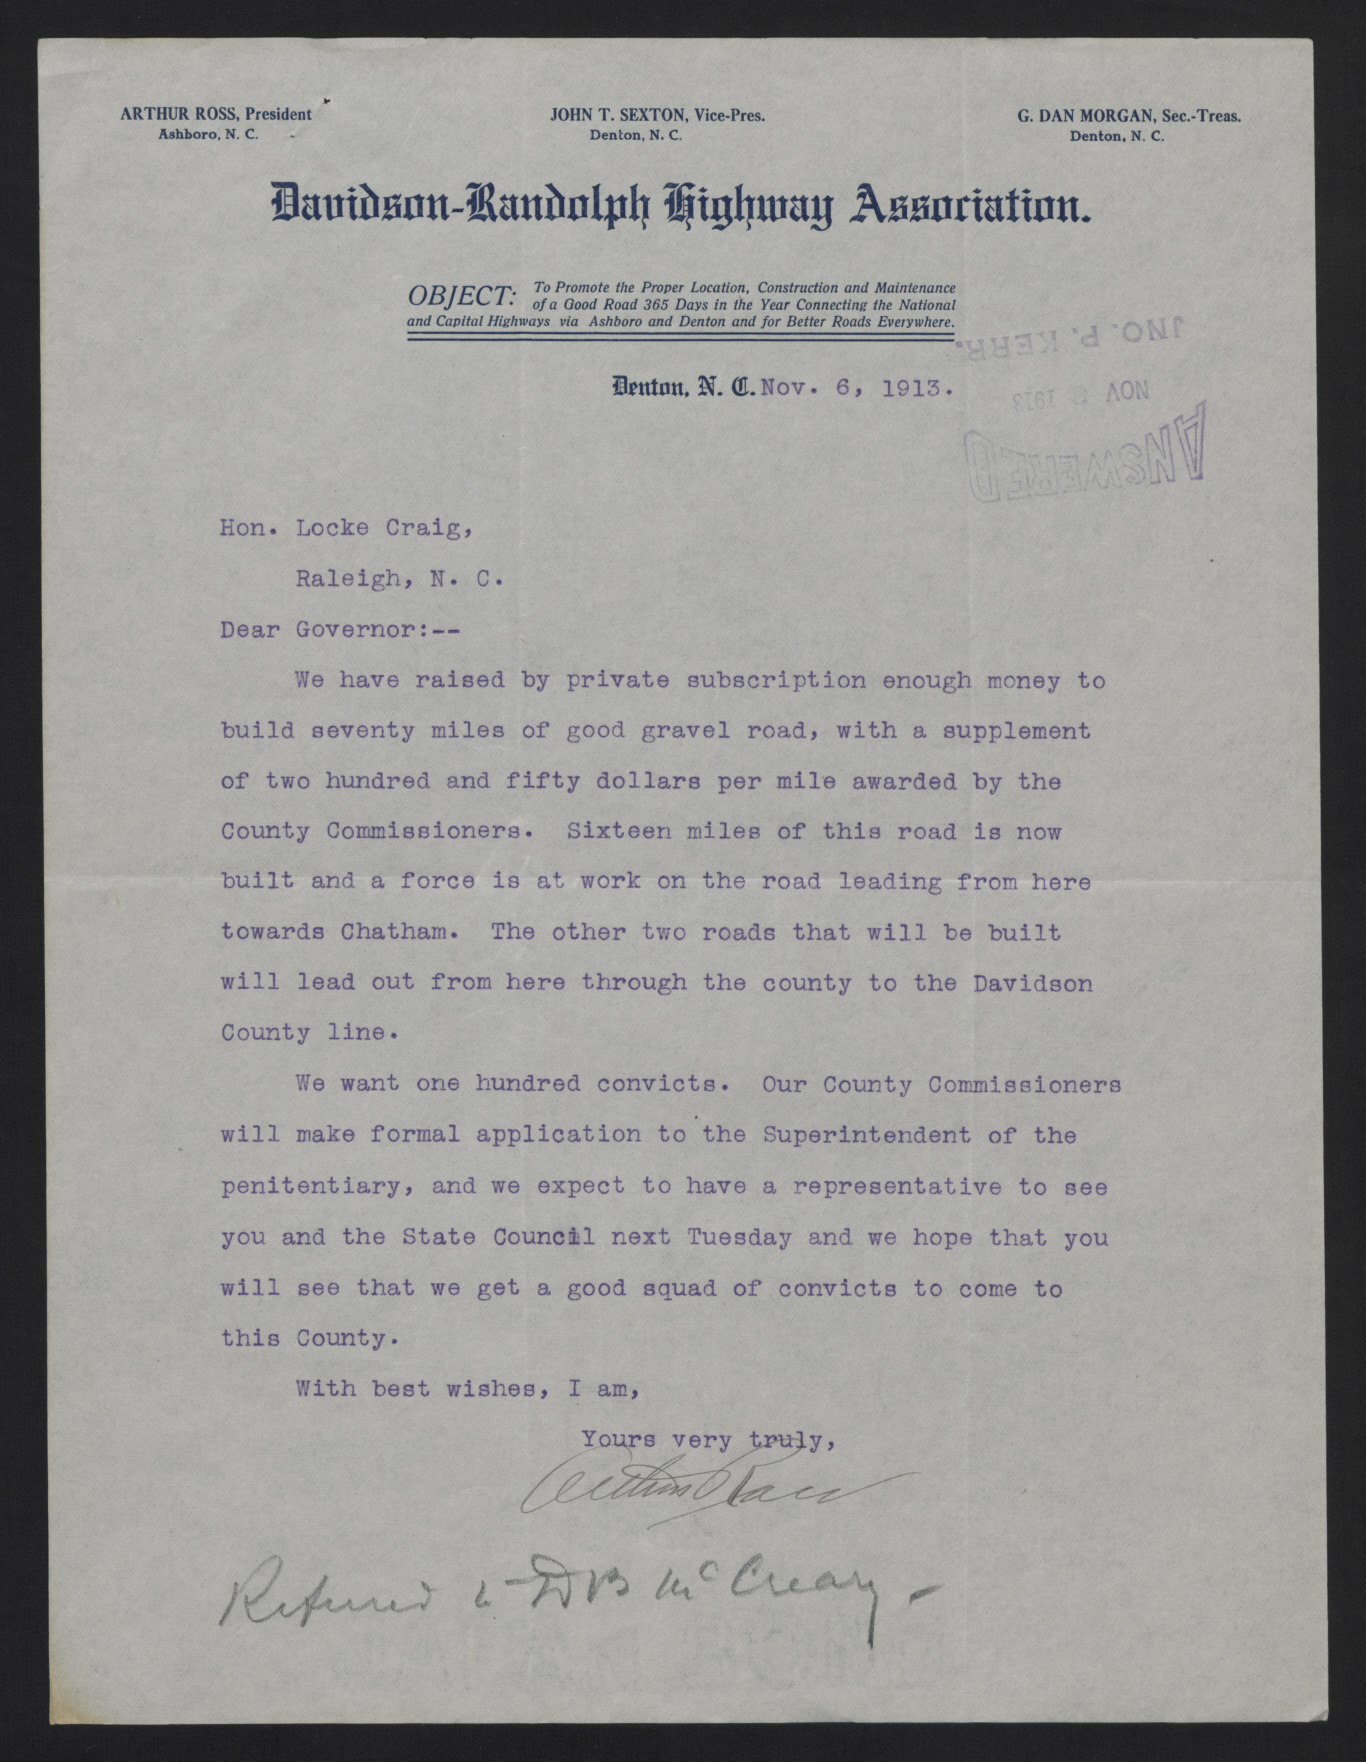 Letter from Ross to Craig, November 6, 1913